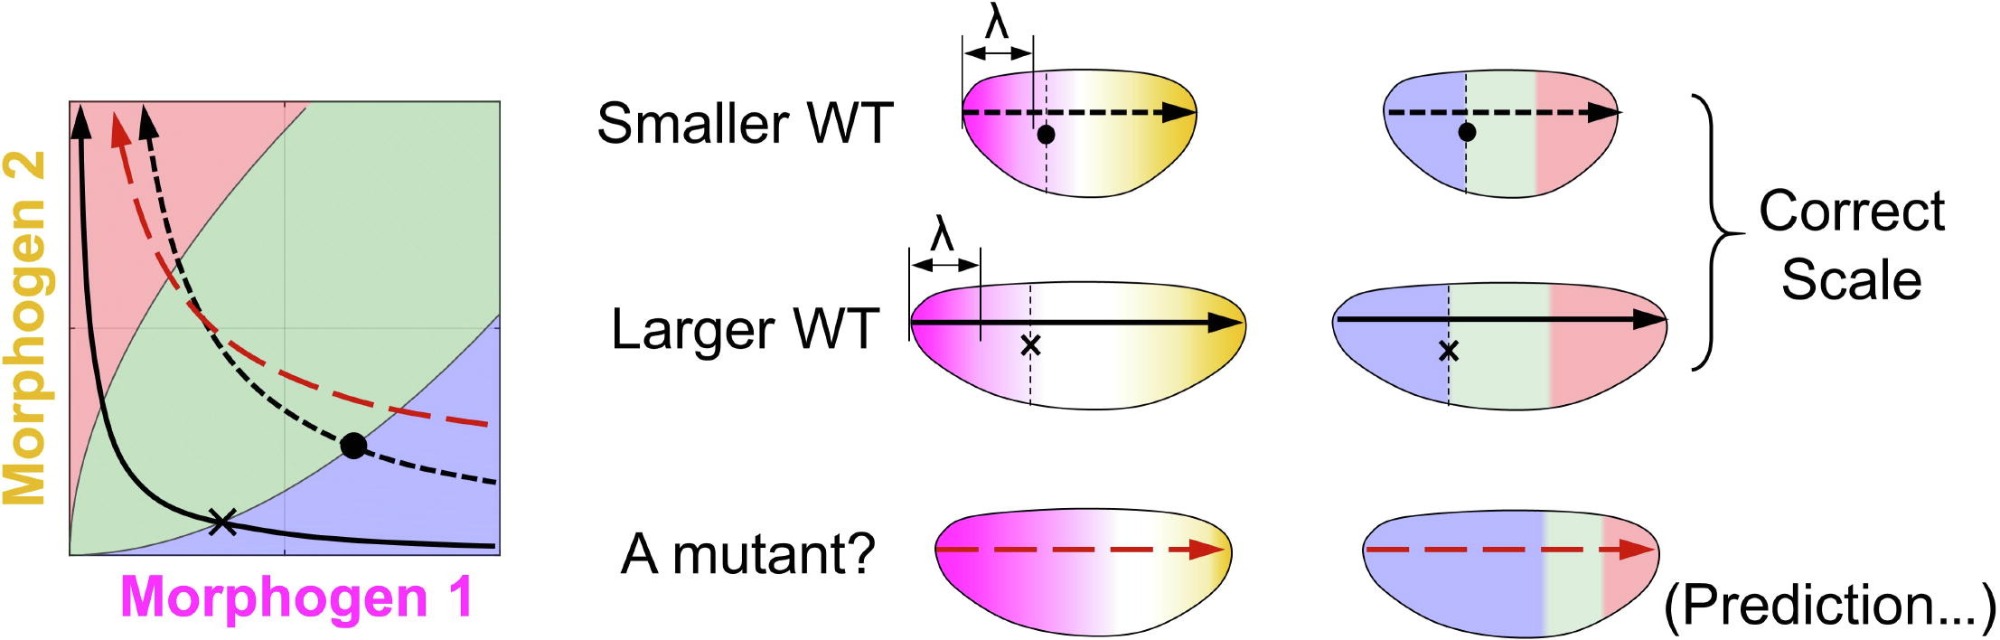 Scale invariance in Drosophila segmentation